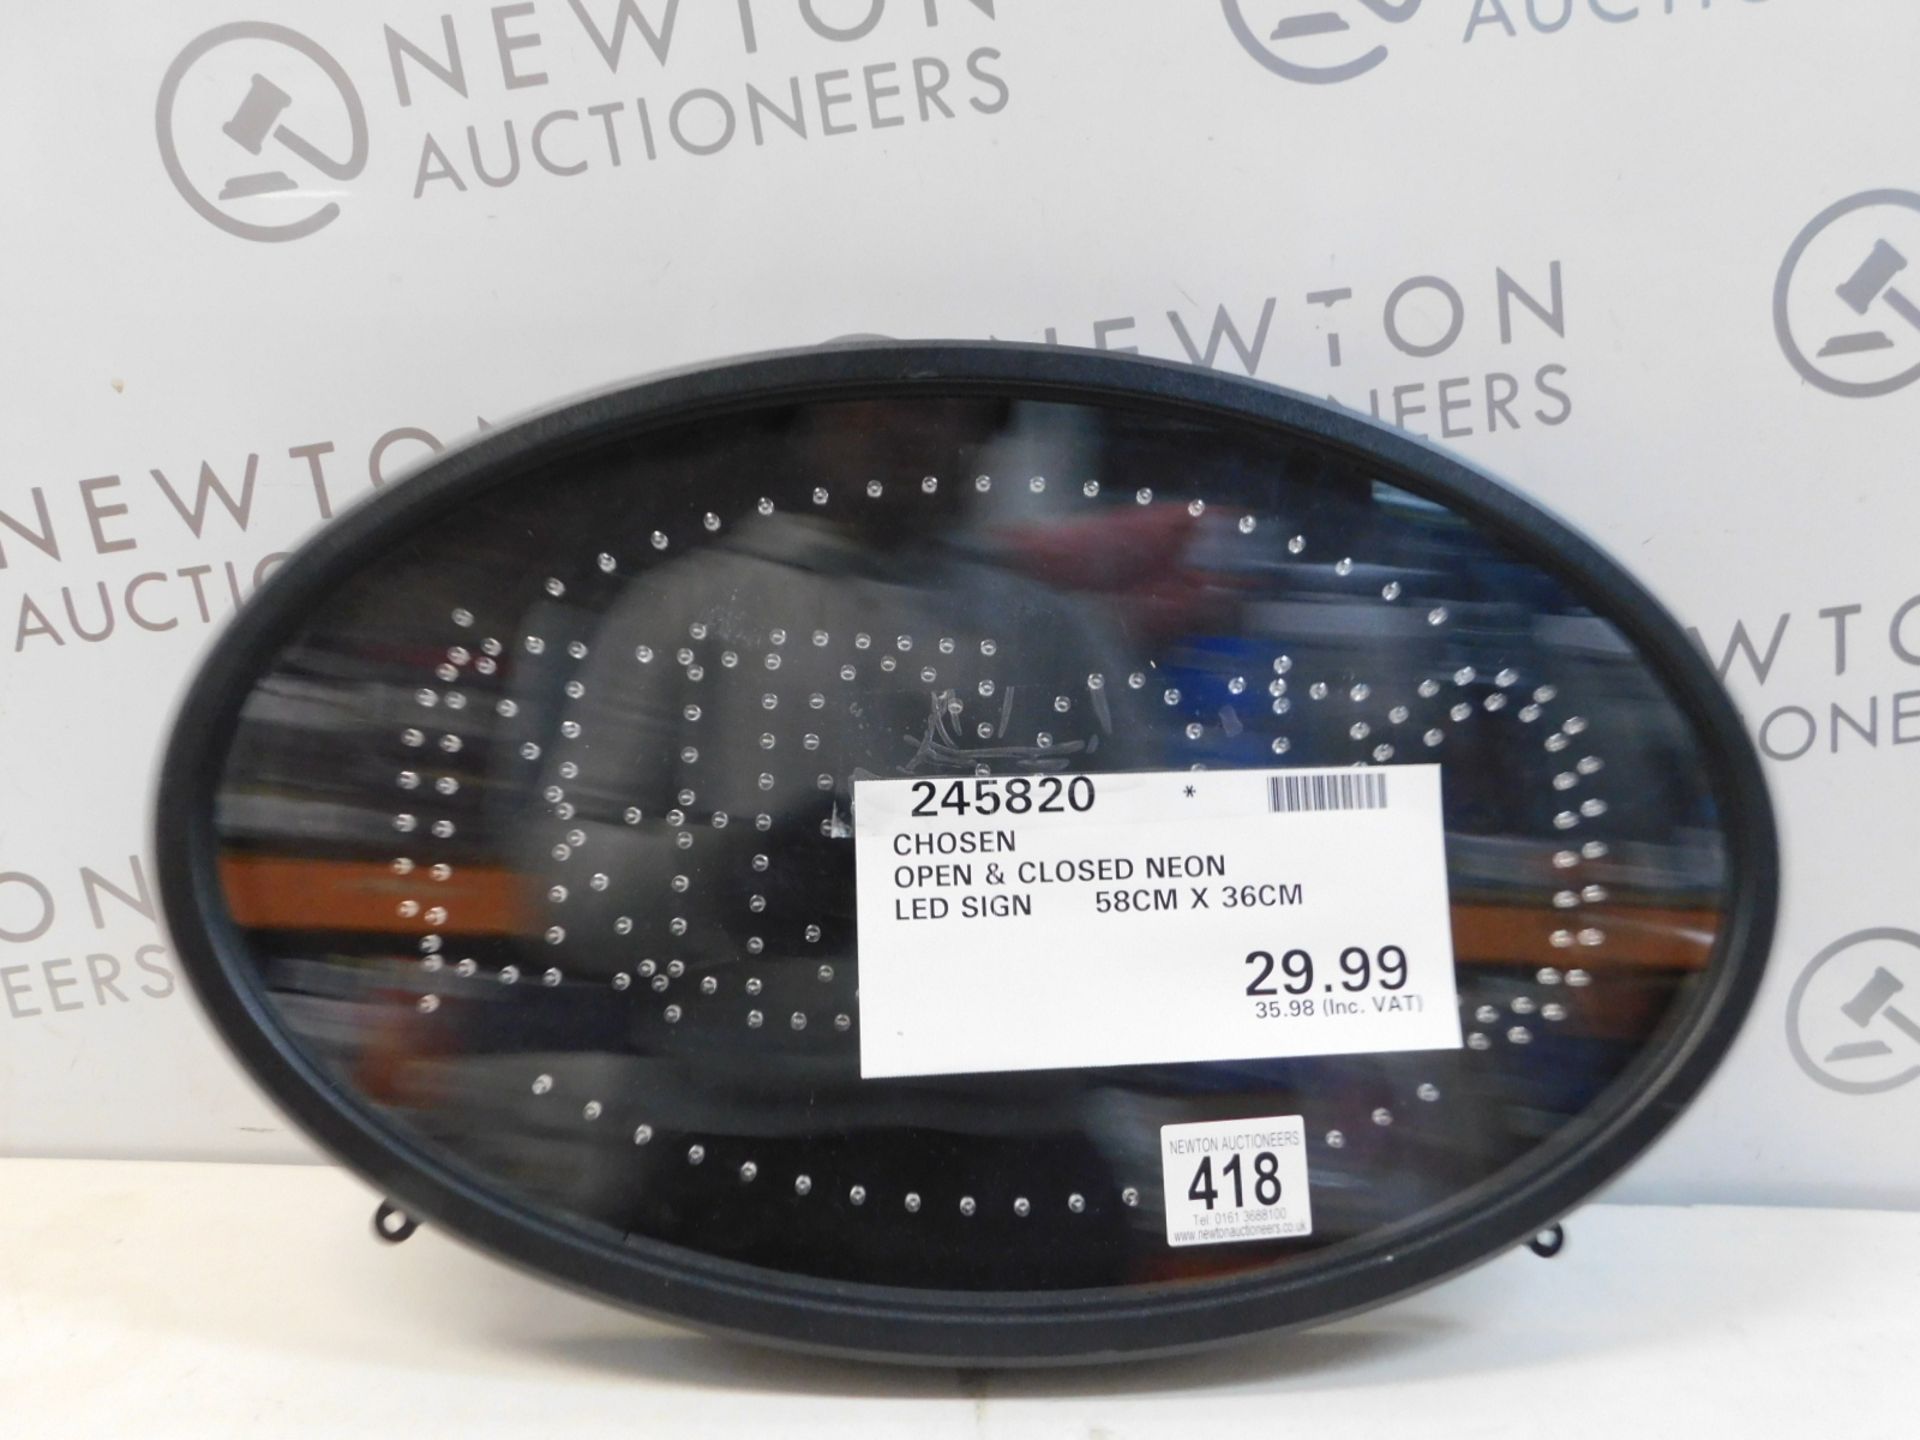 1 CHOSEN OPEN & CLOSED NEON LED SIGN (58CM X 36CM) RRP £39.99